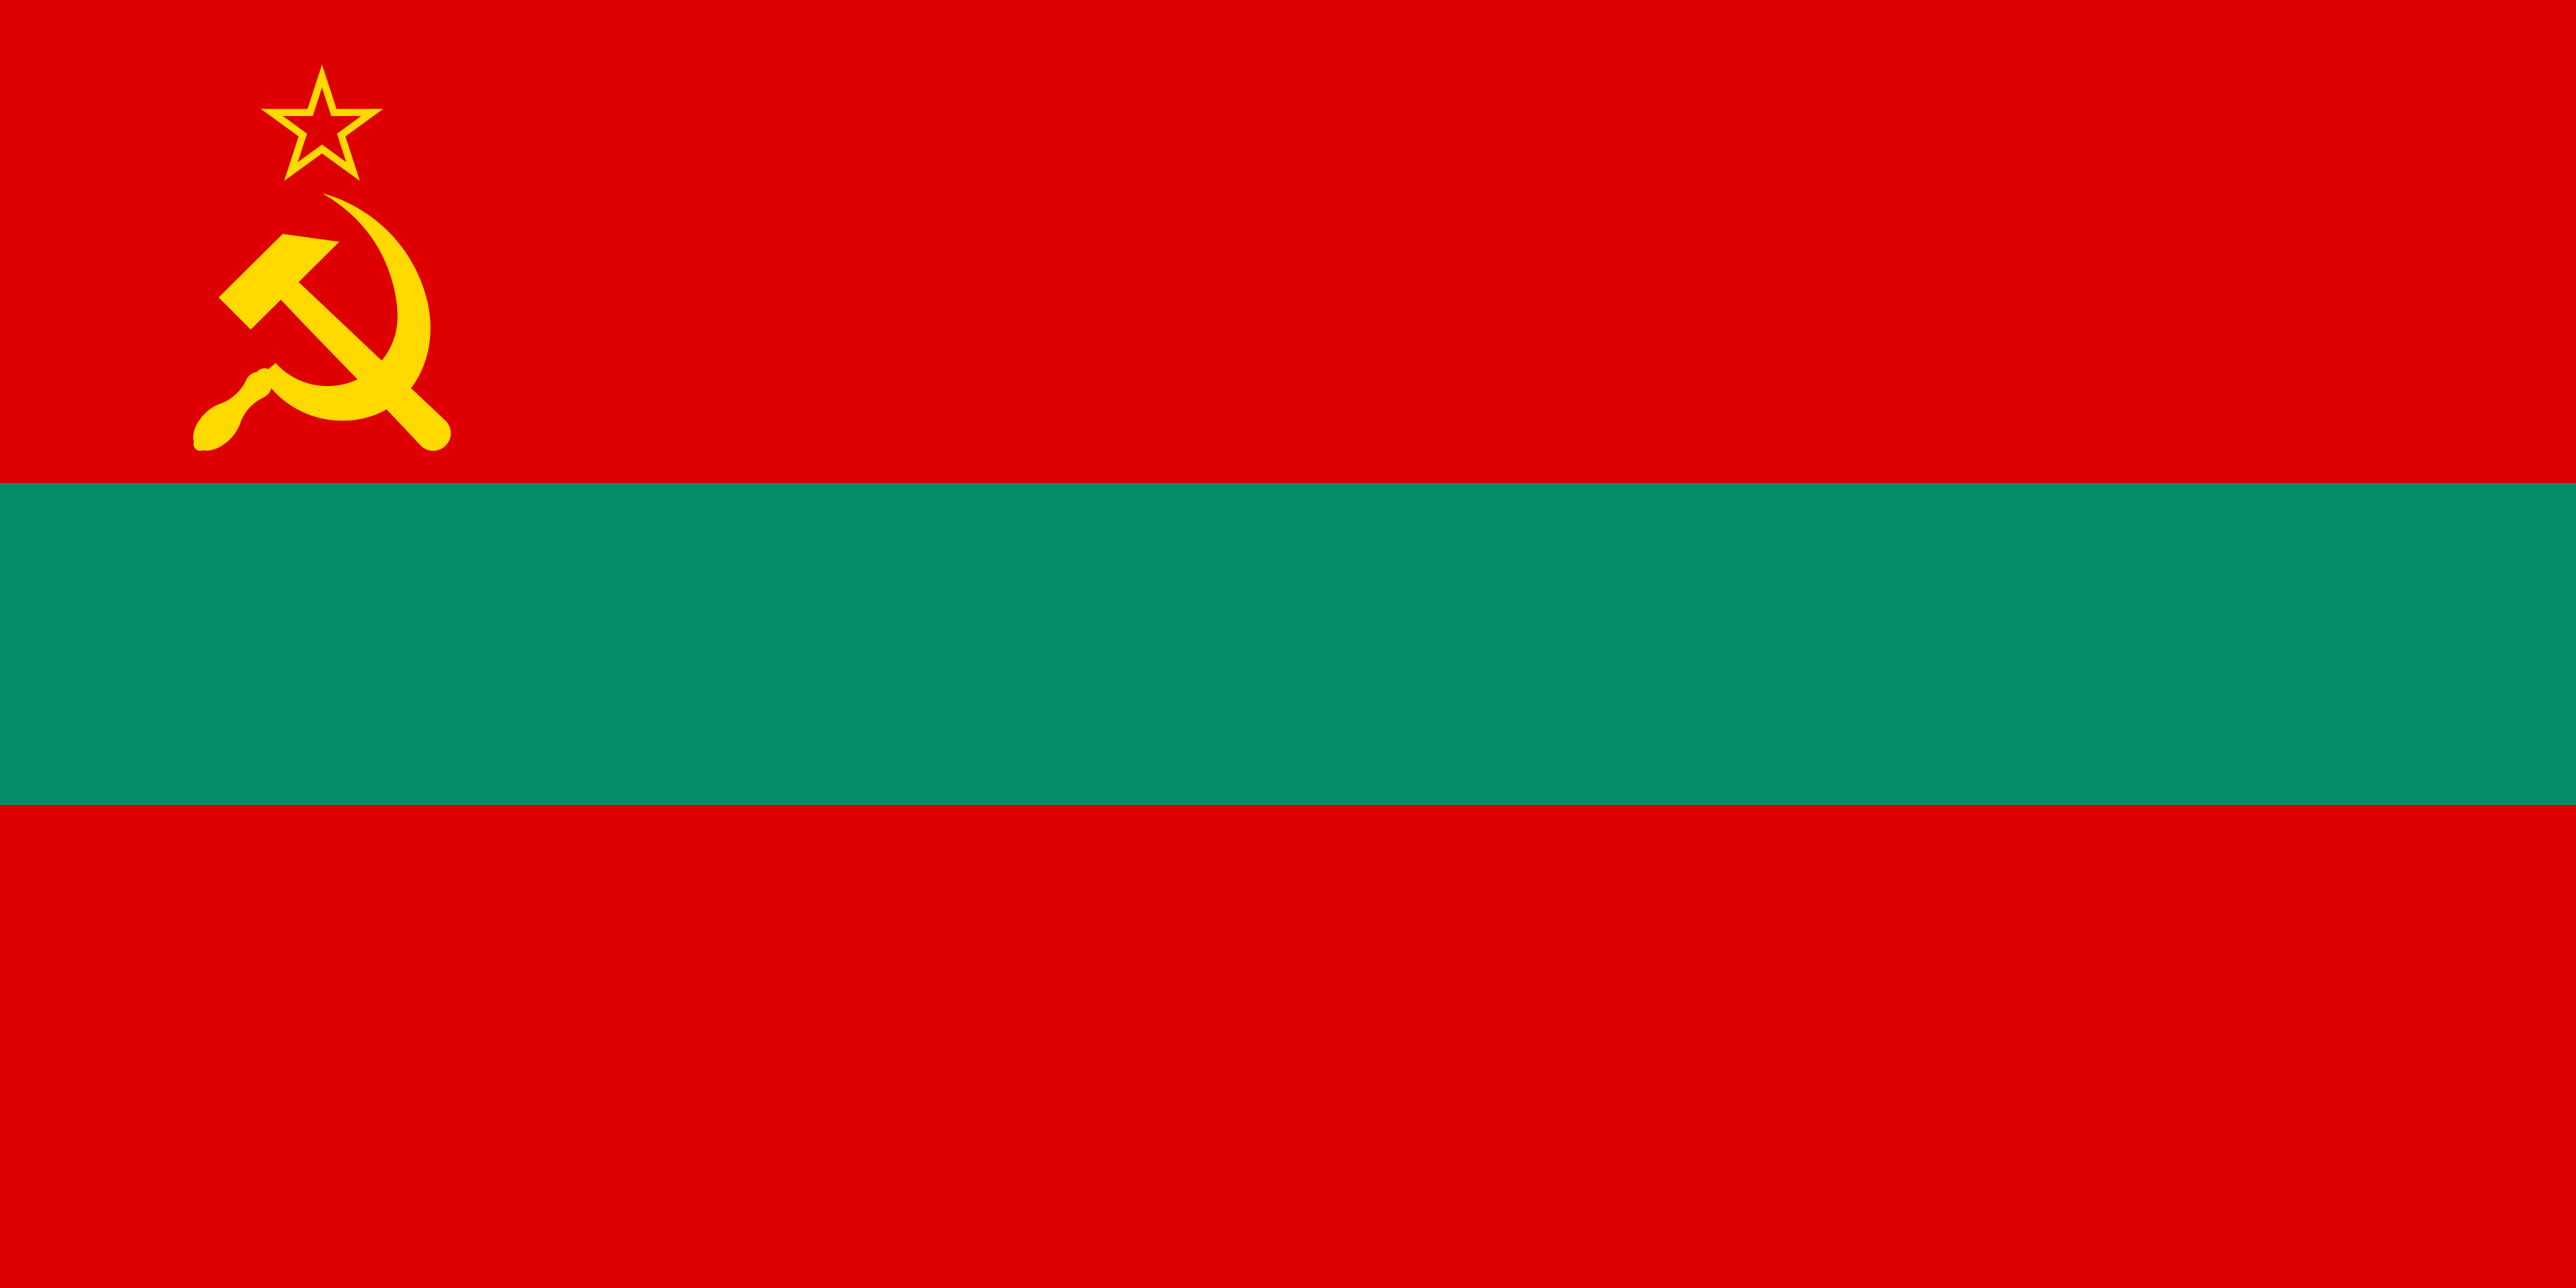 Transnistria Flag Image - Free Download